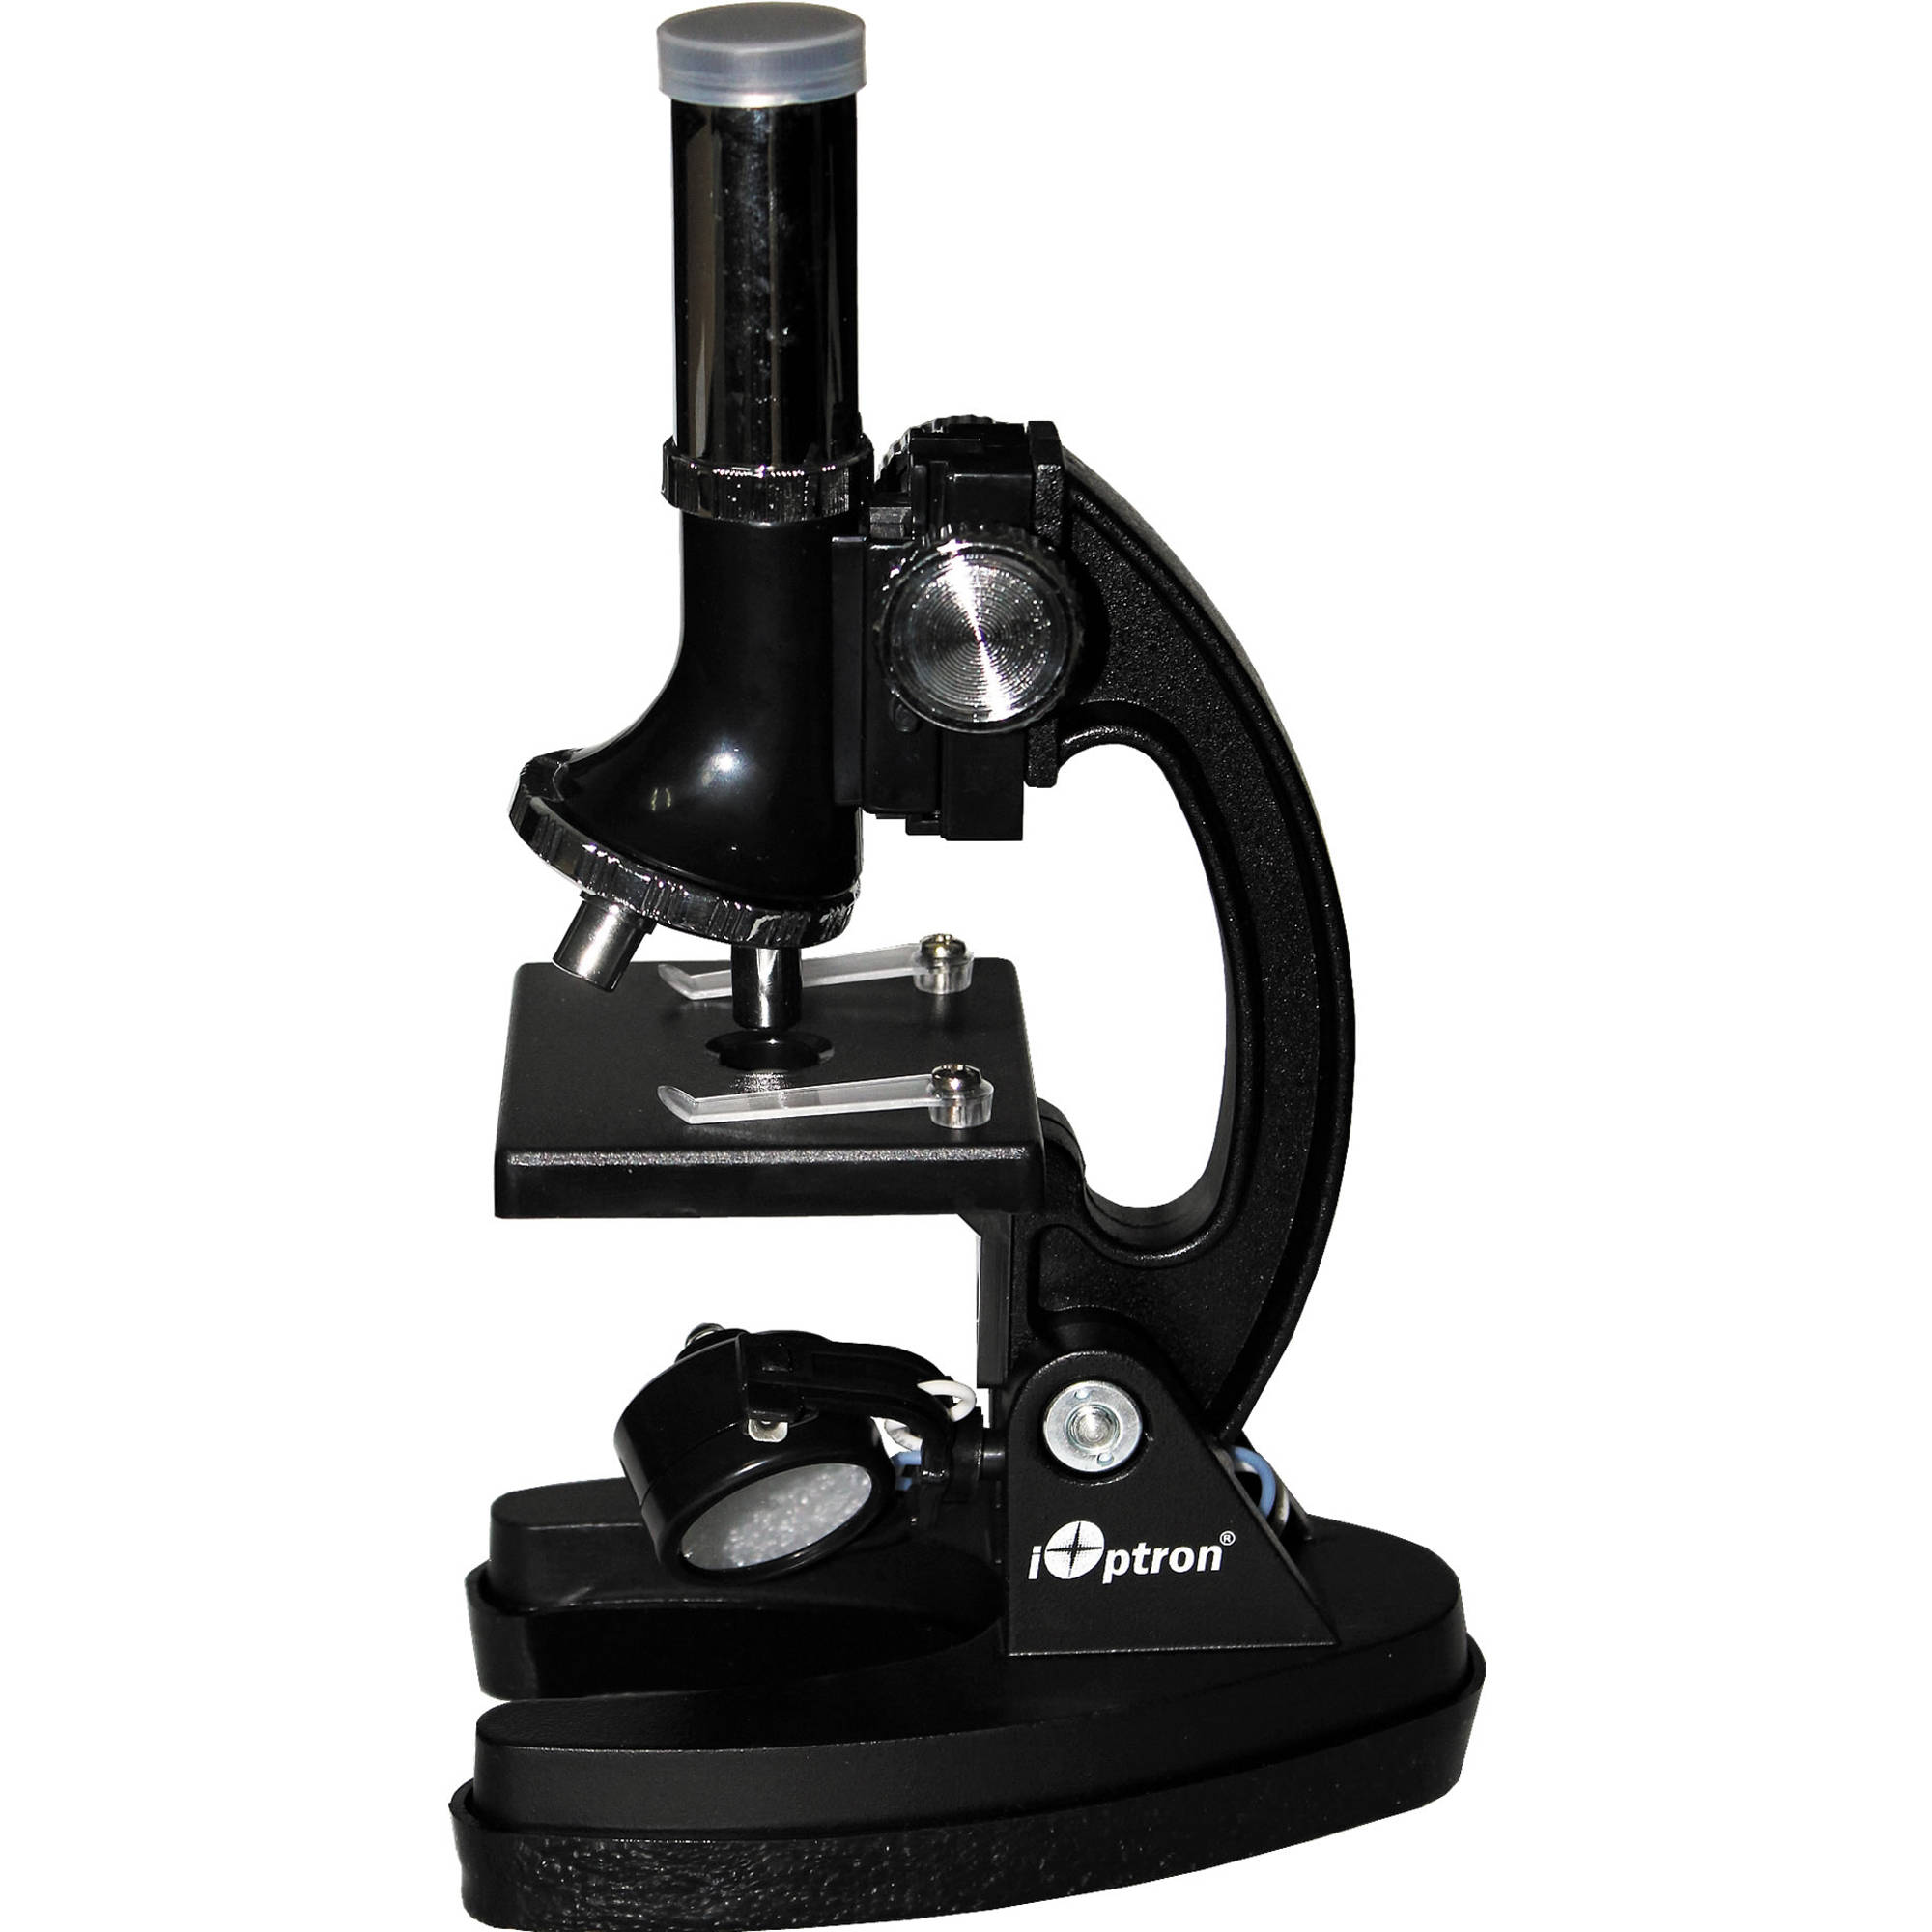 Black iOptron 6805 84-Piece Microscope Kit